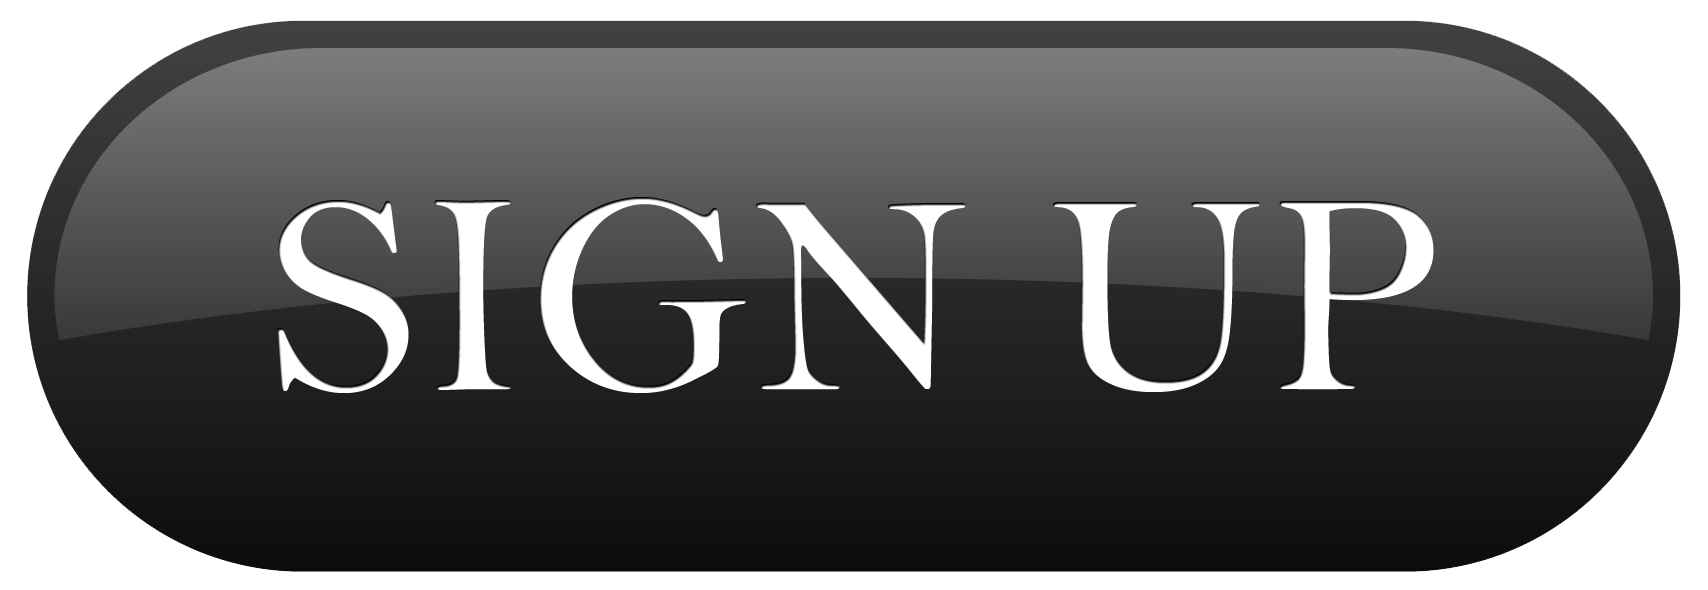 Sign Up Button Transparent Image PNG Image